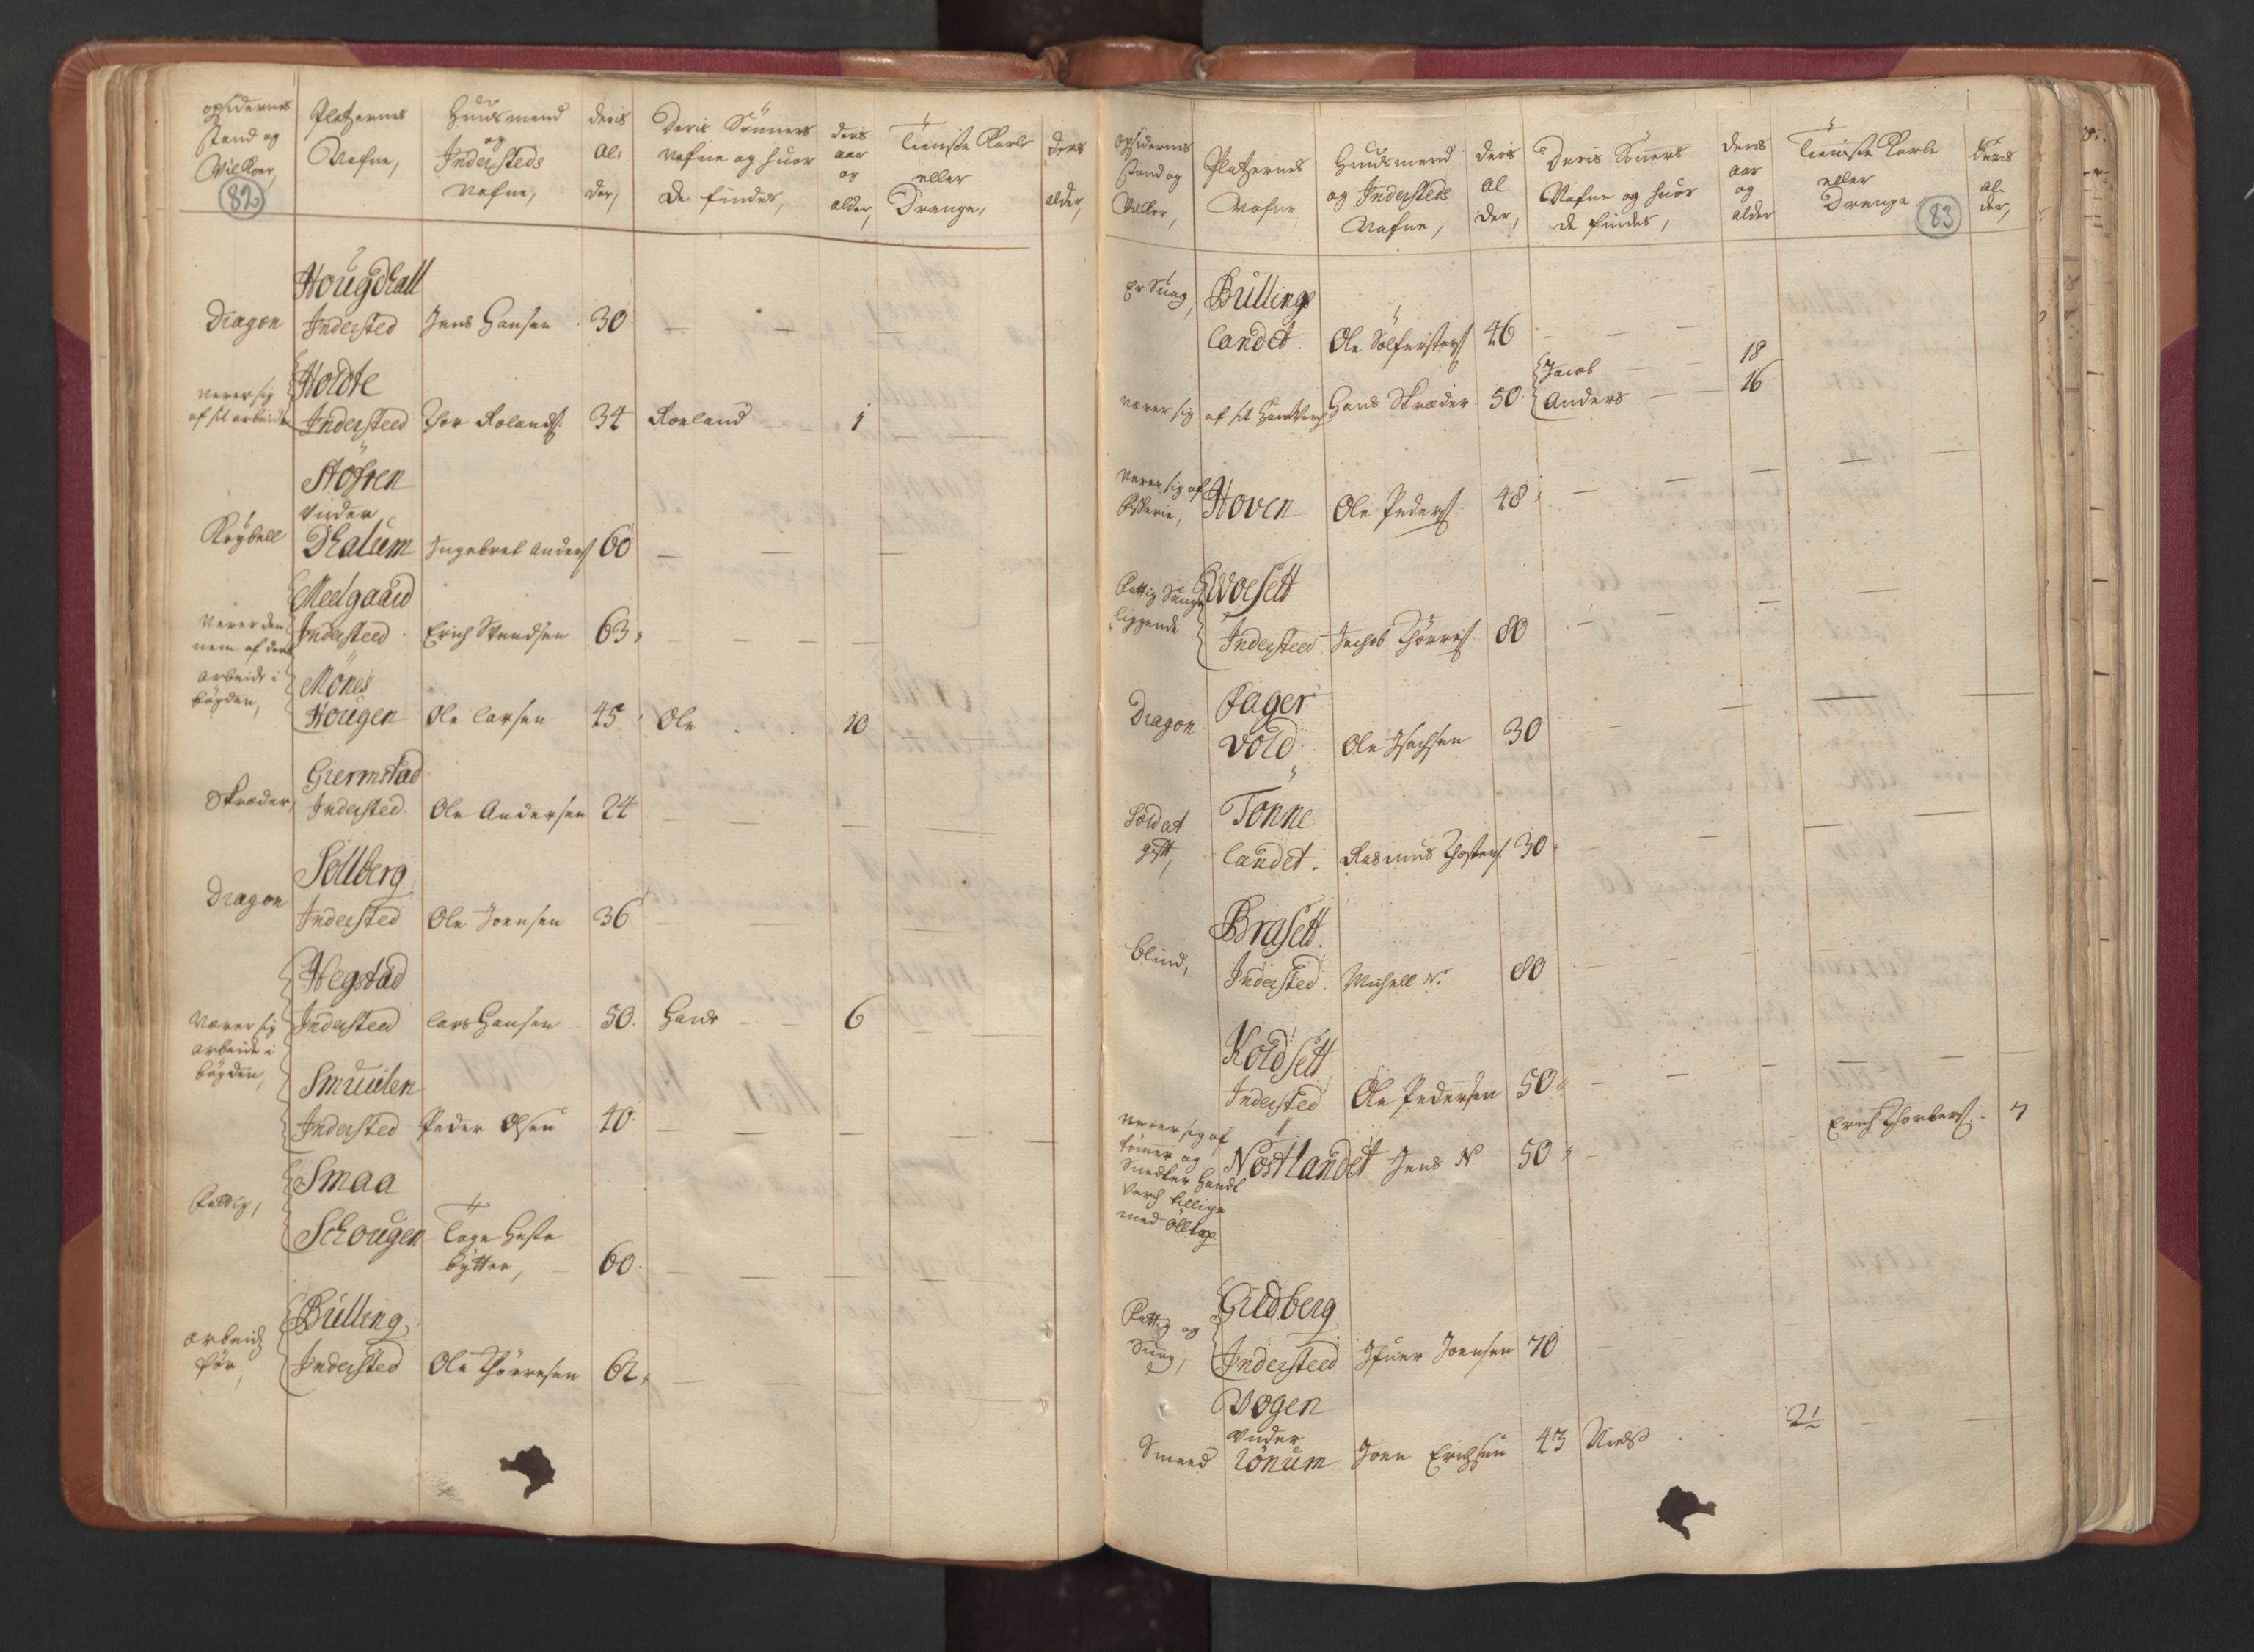 RA, Census (manntall) 1701, no. 15: Inderøy fogderi and Namdal fogderi, 1701, p. 82-83